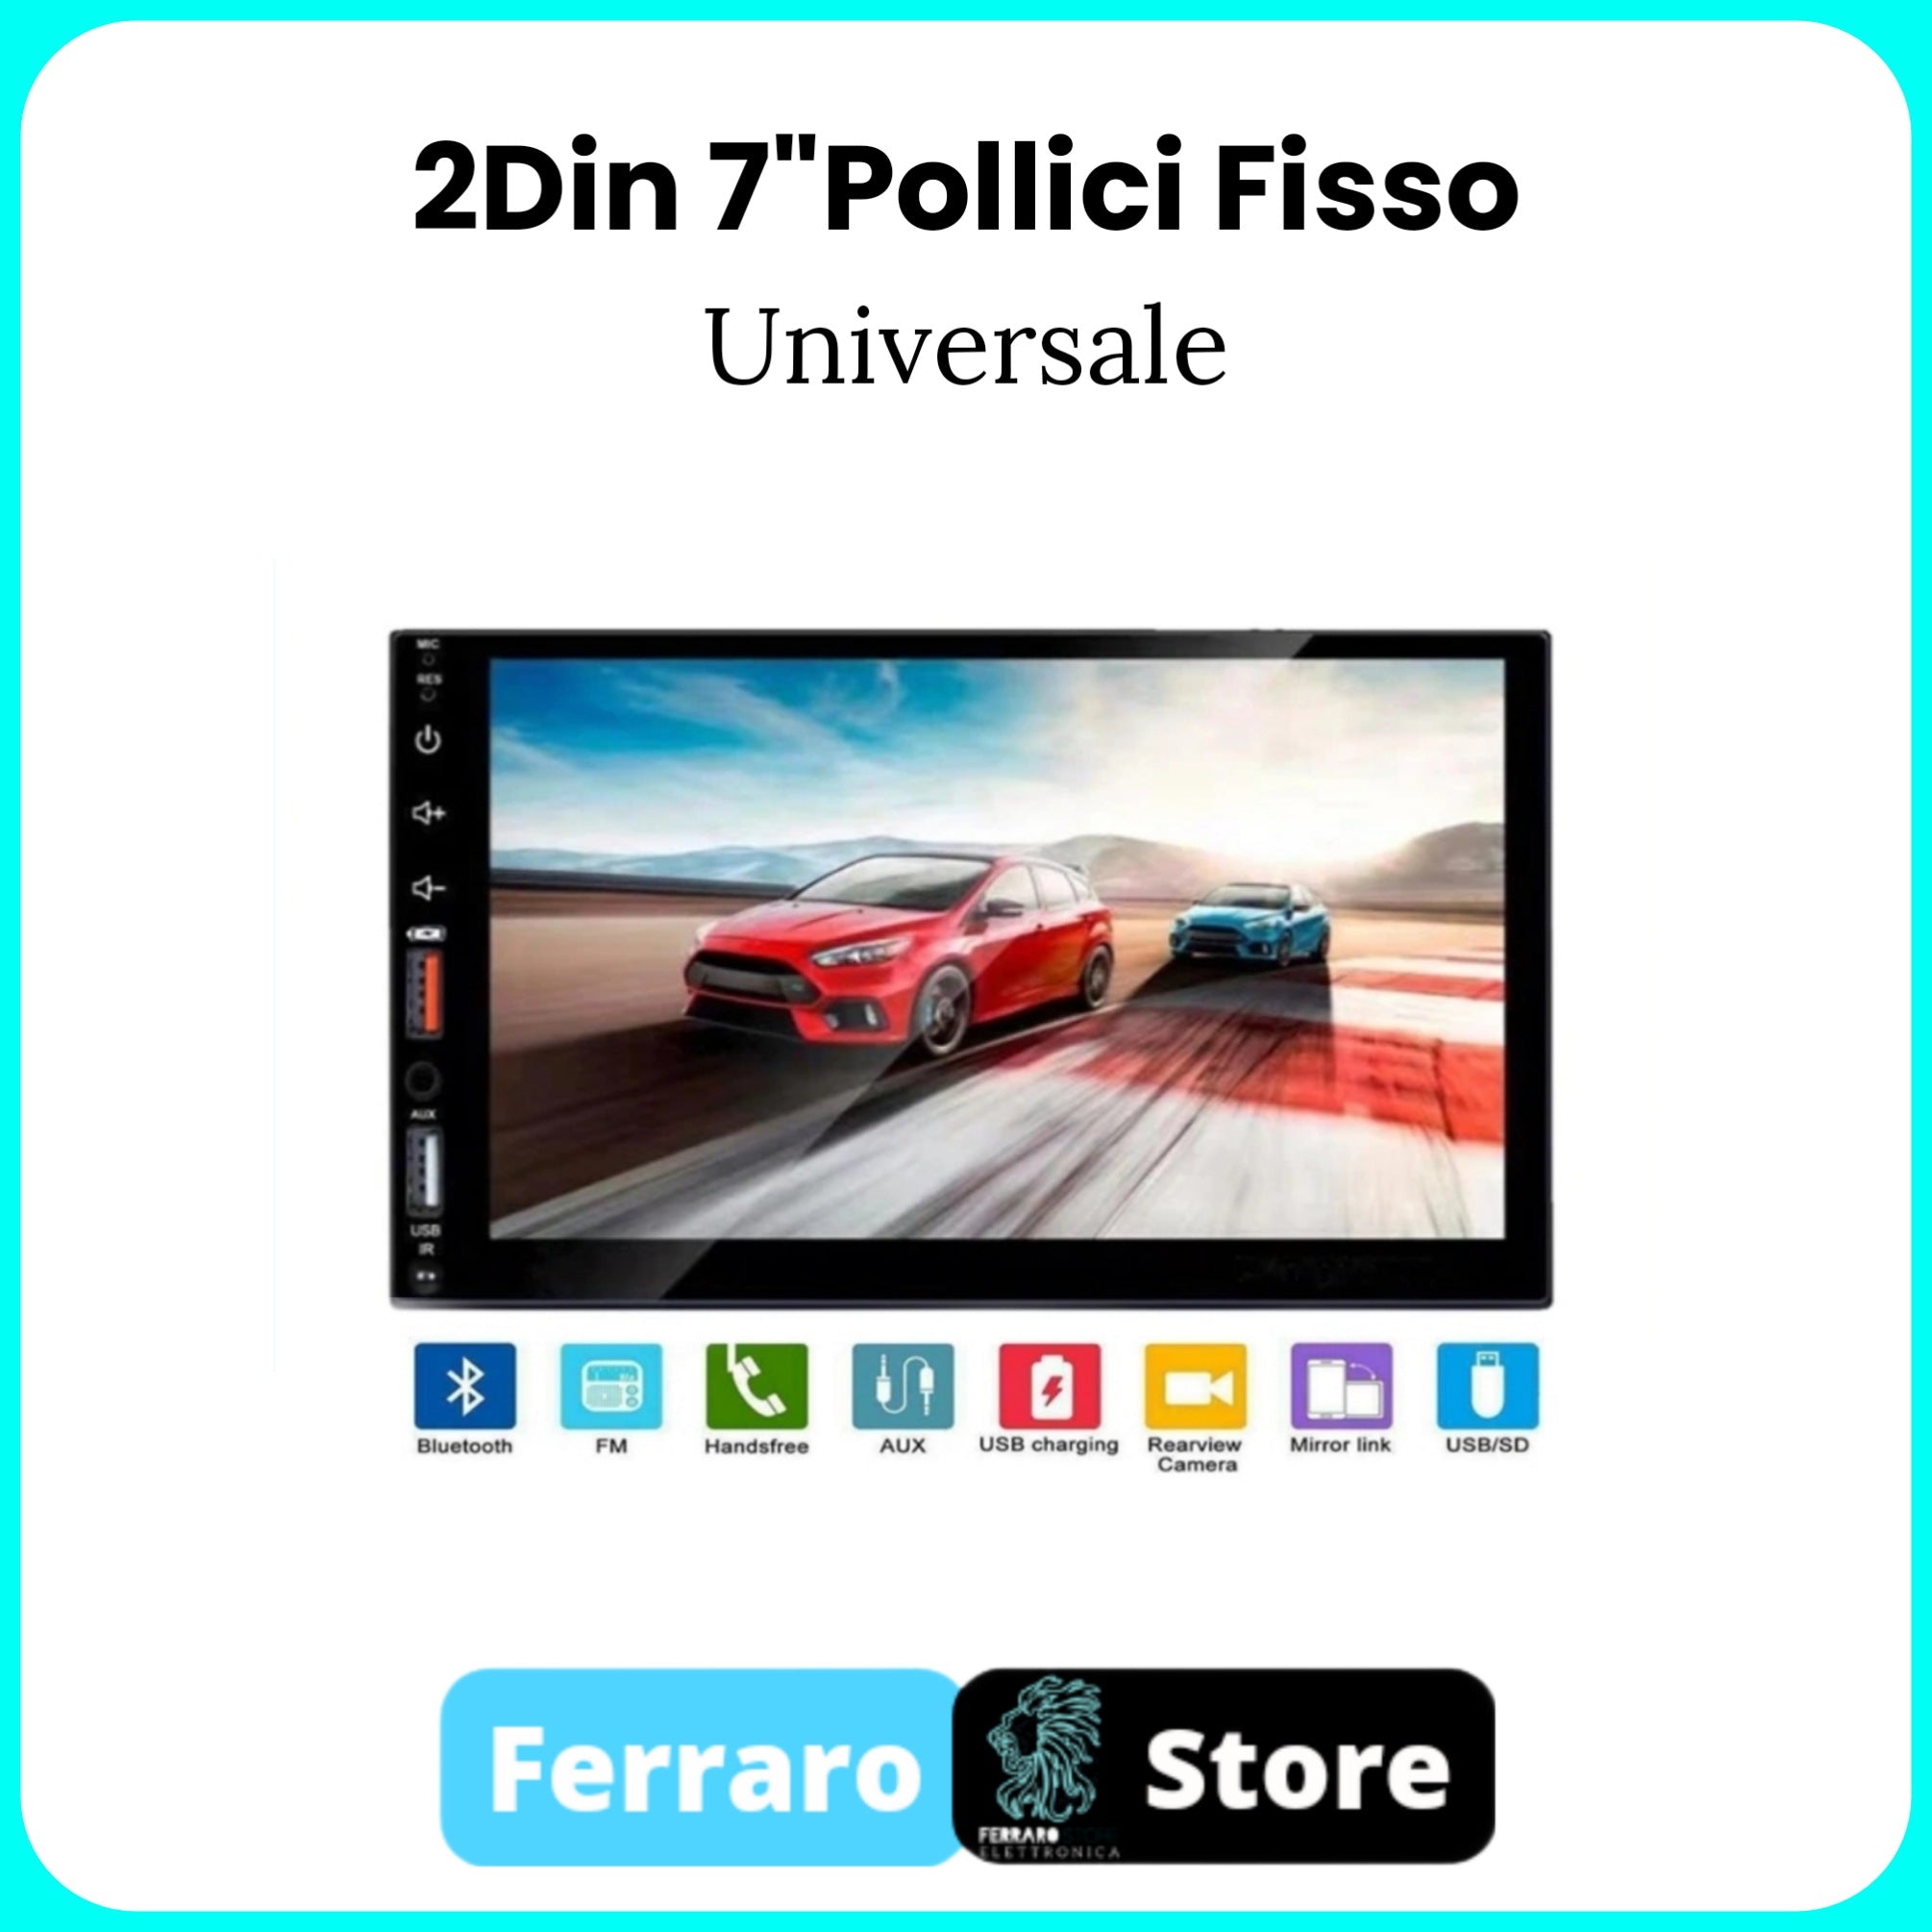 Autoradio Universale [FISSO] - 2Din 7" Pollici, Bluetooth, Radio, Mirror link Android e IOS